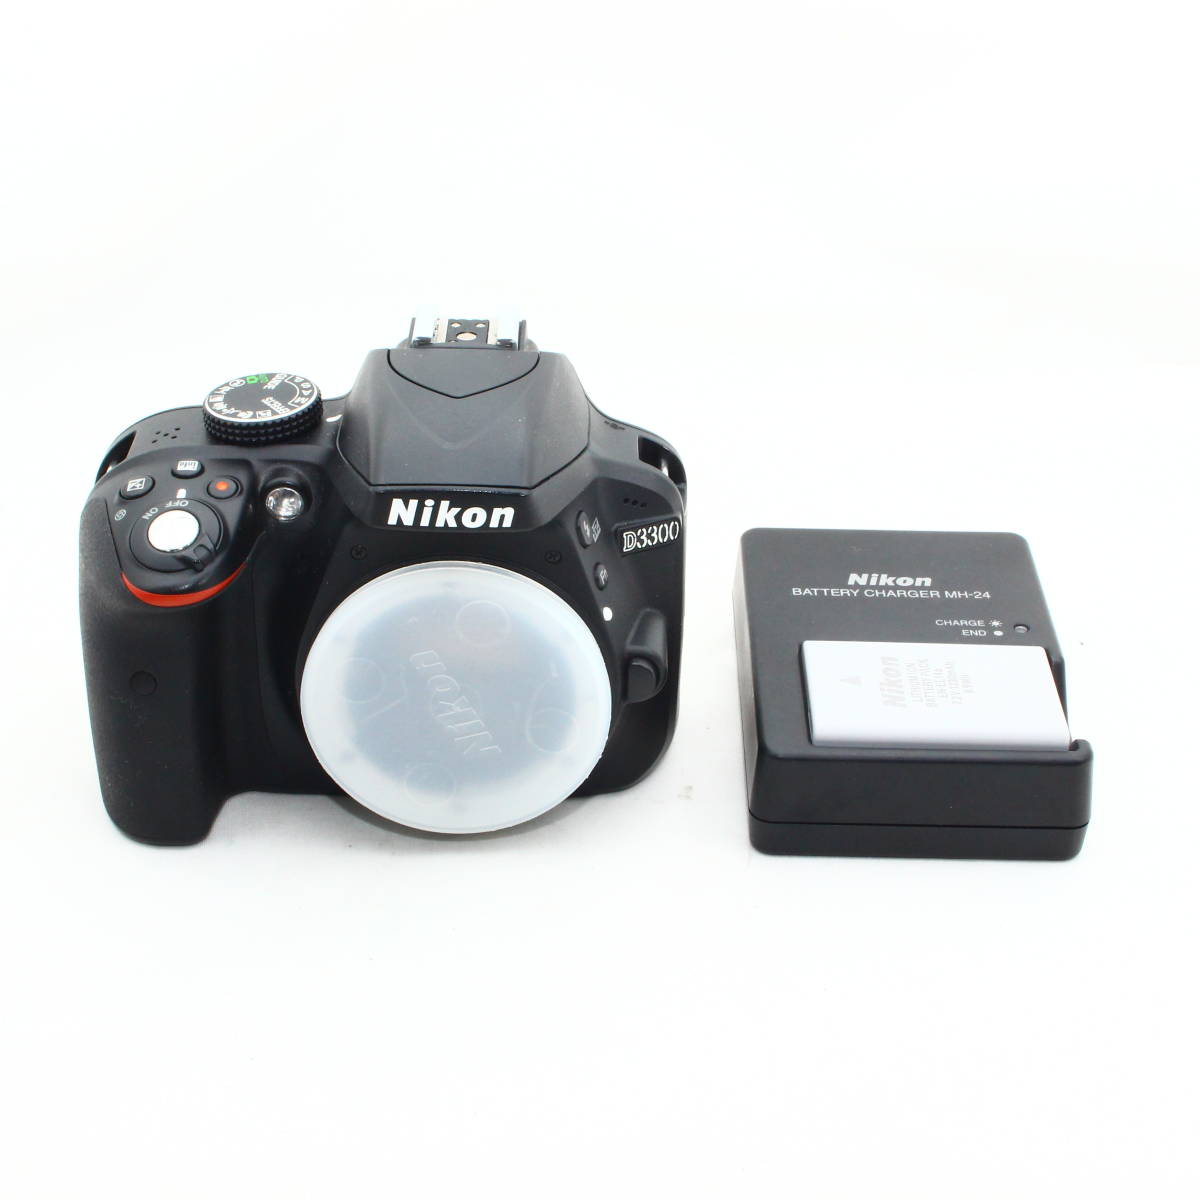 Nikon デジタル一眼レフカメラ D3300 ボディ ブラック D3300BK #2312034